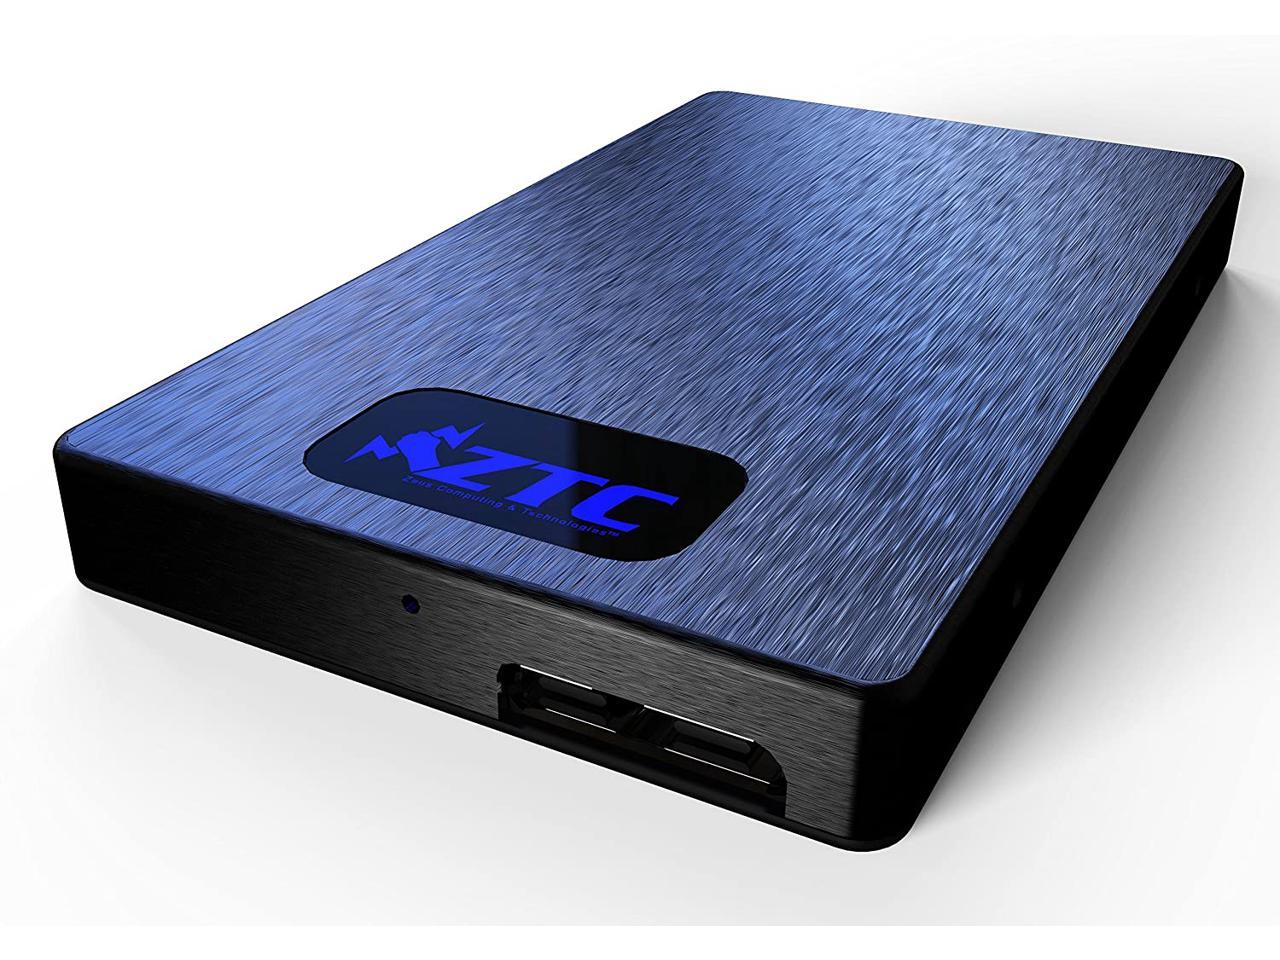 ZTC Sky Board mSATA to USB3.0 SSD Enclosure Adapter Case - UASP Support - Model ZTC-EN002